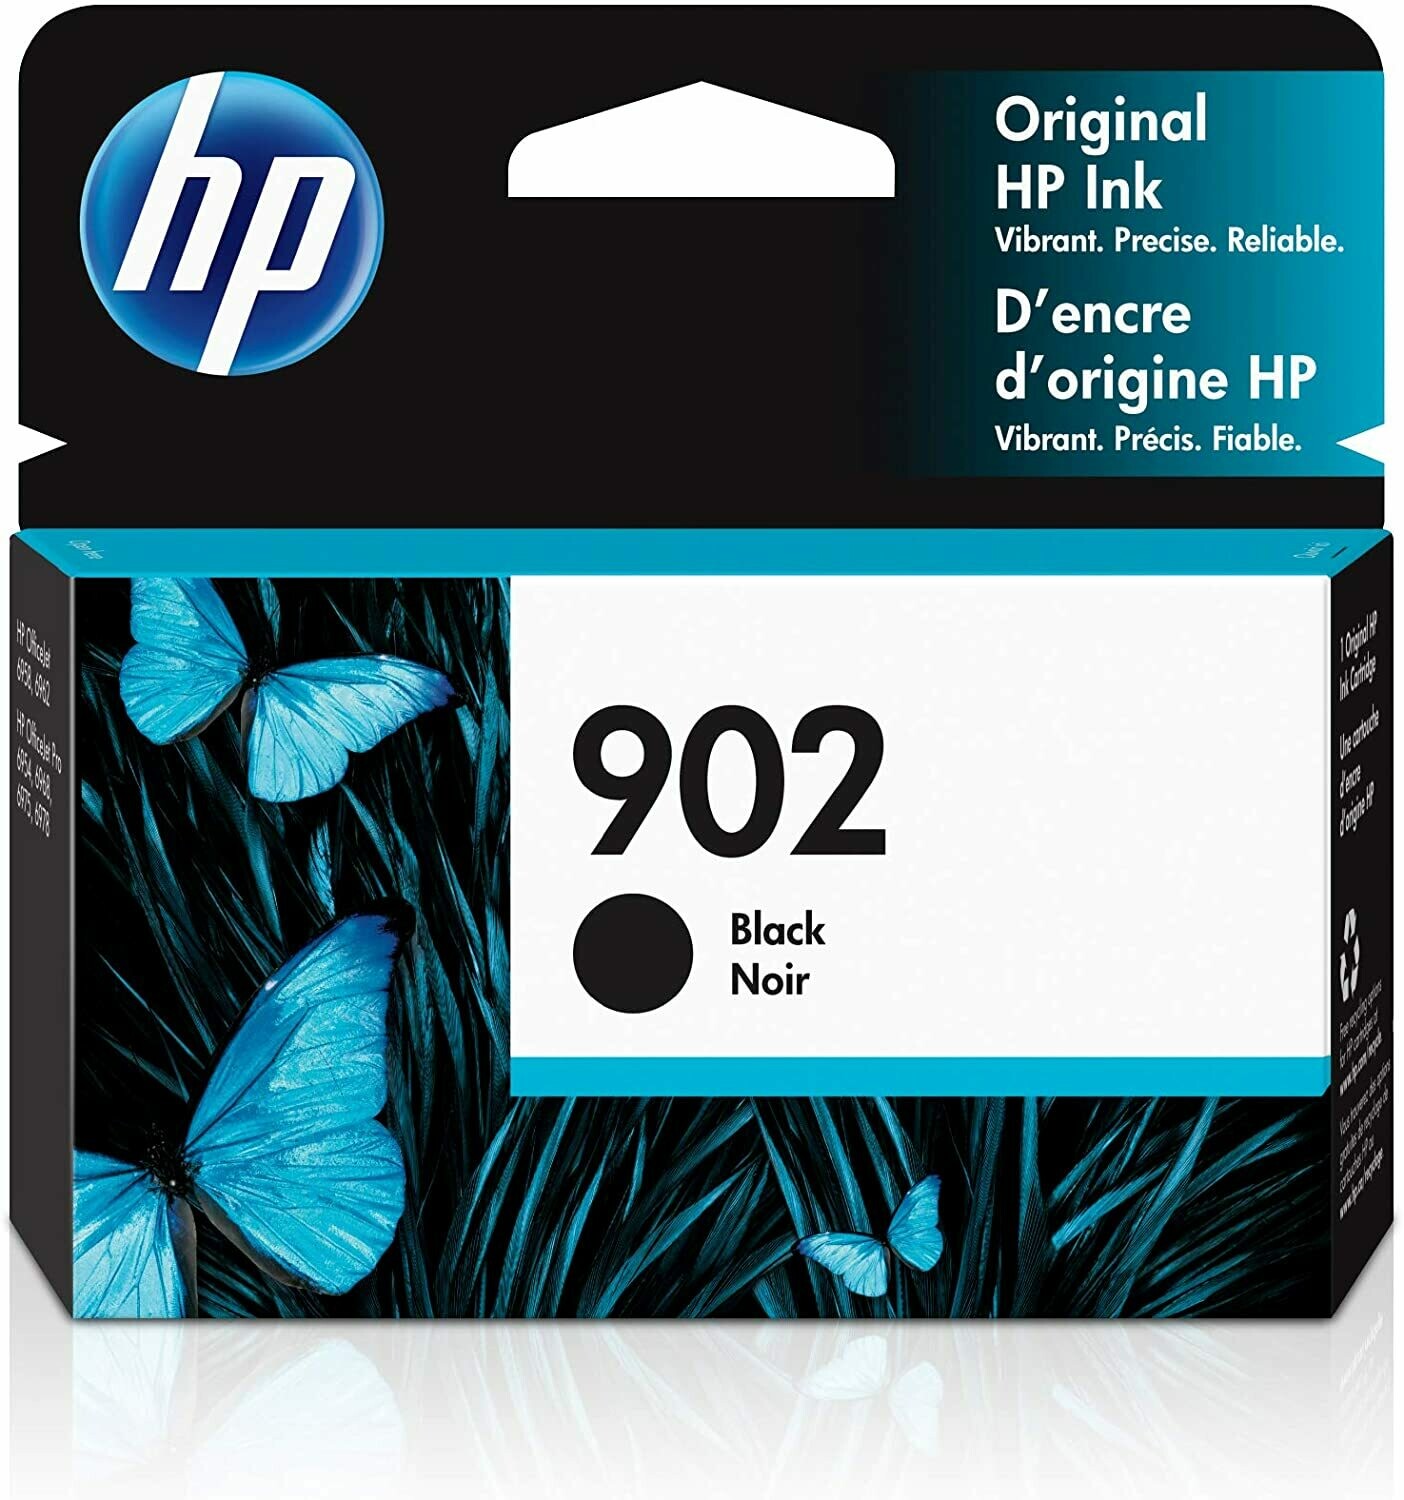 HP 902 Original Ink Cartridge - Black